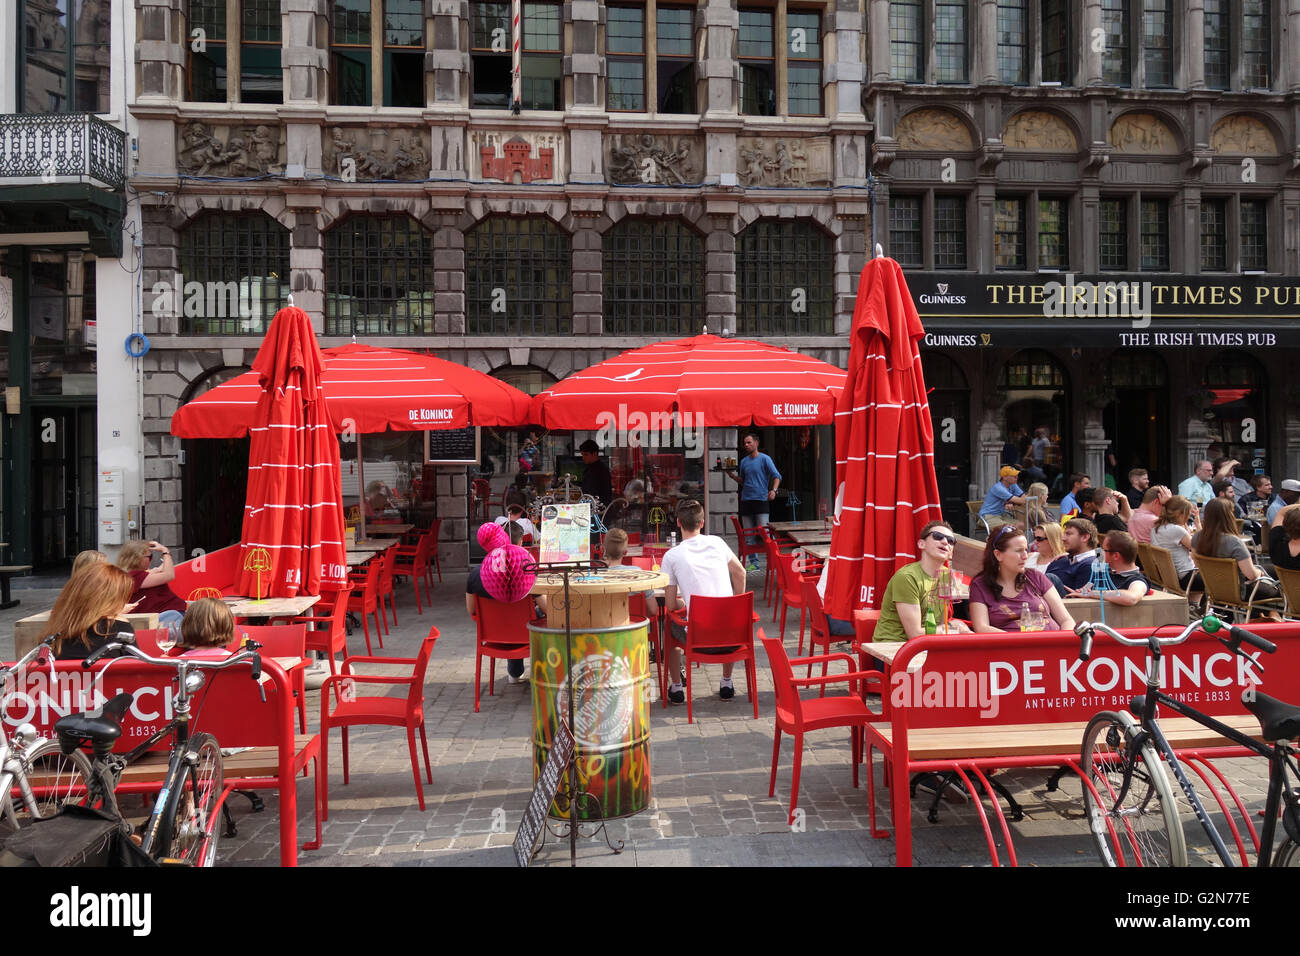 Essen und trinken in Antwerpen, Belgien Stockfoto